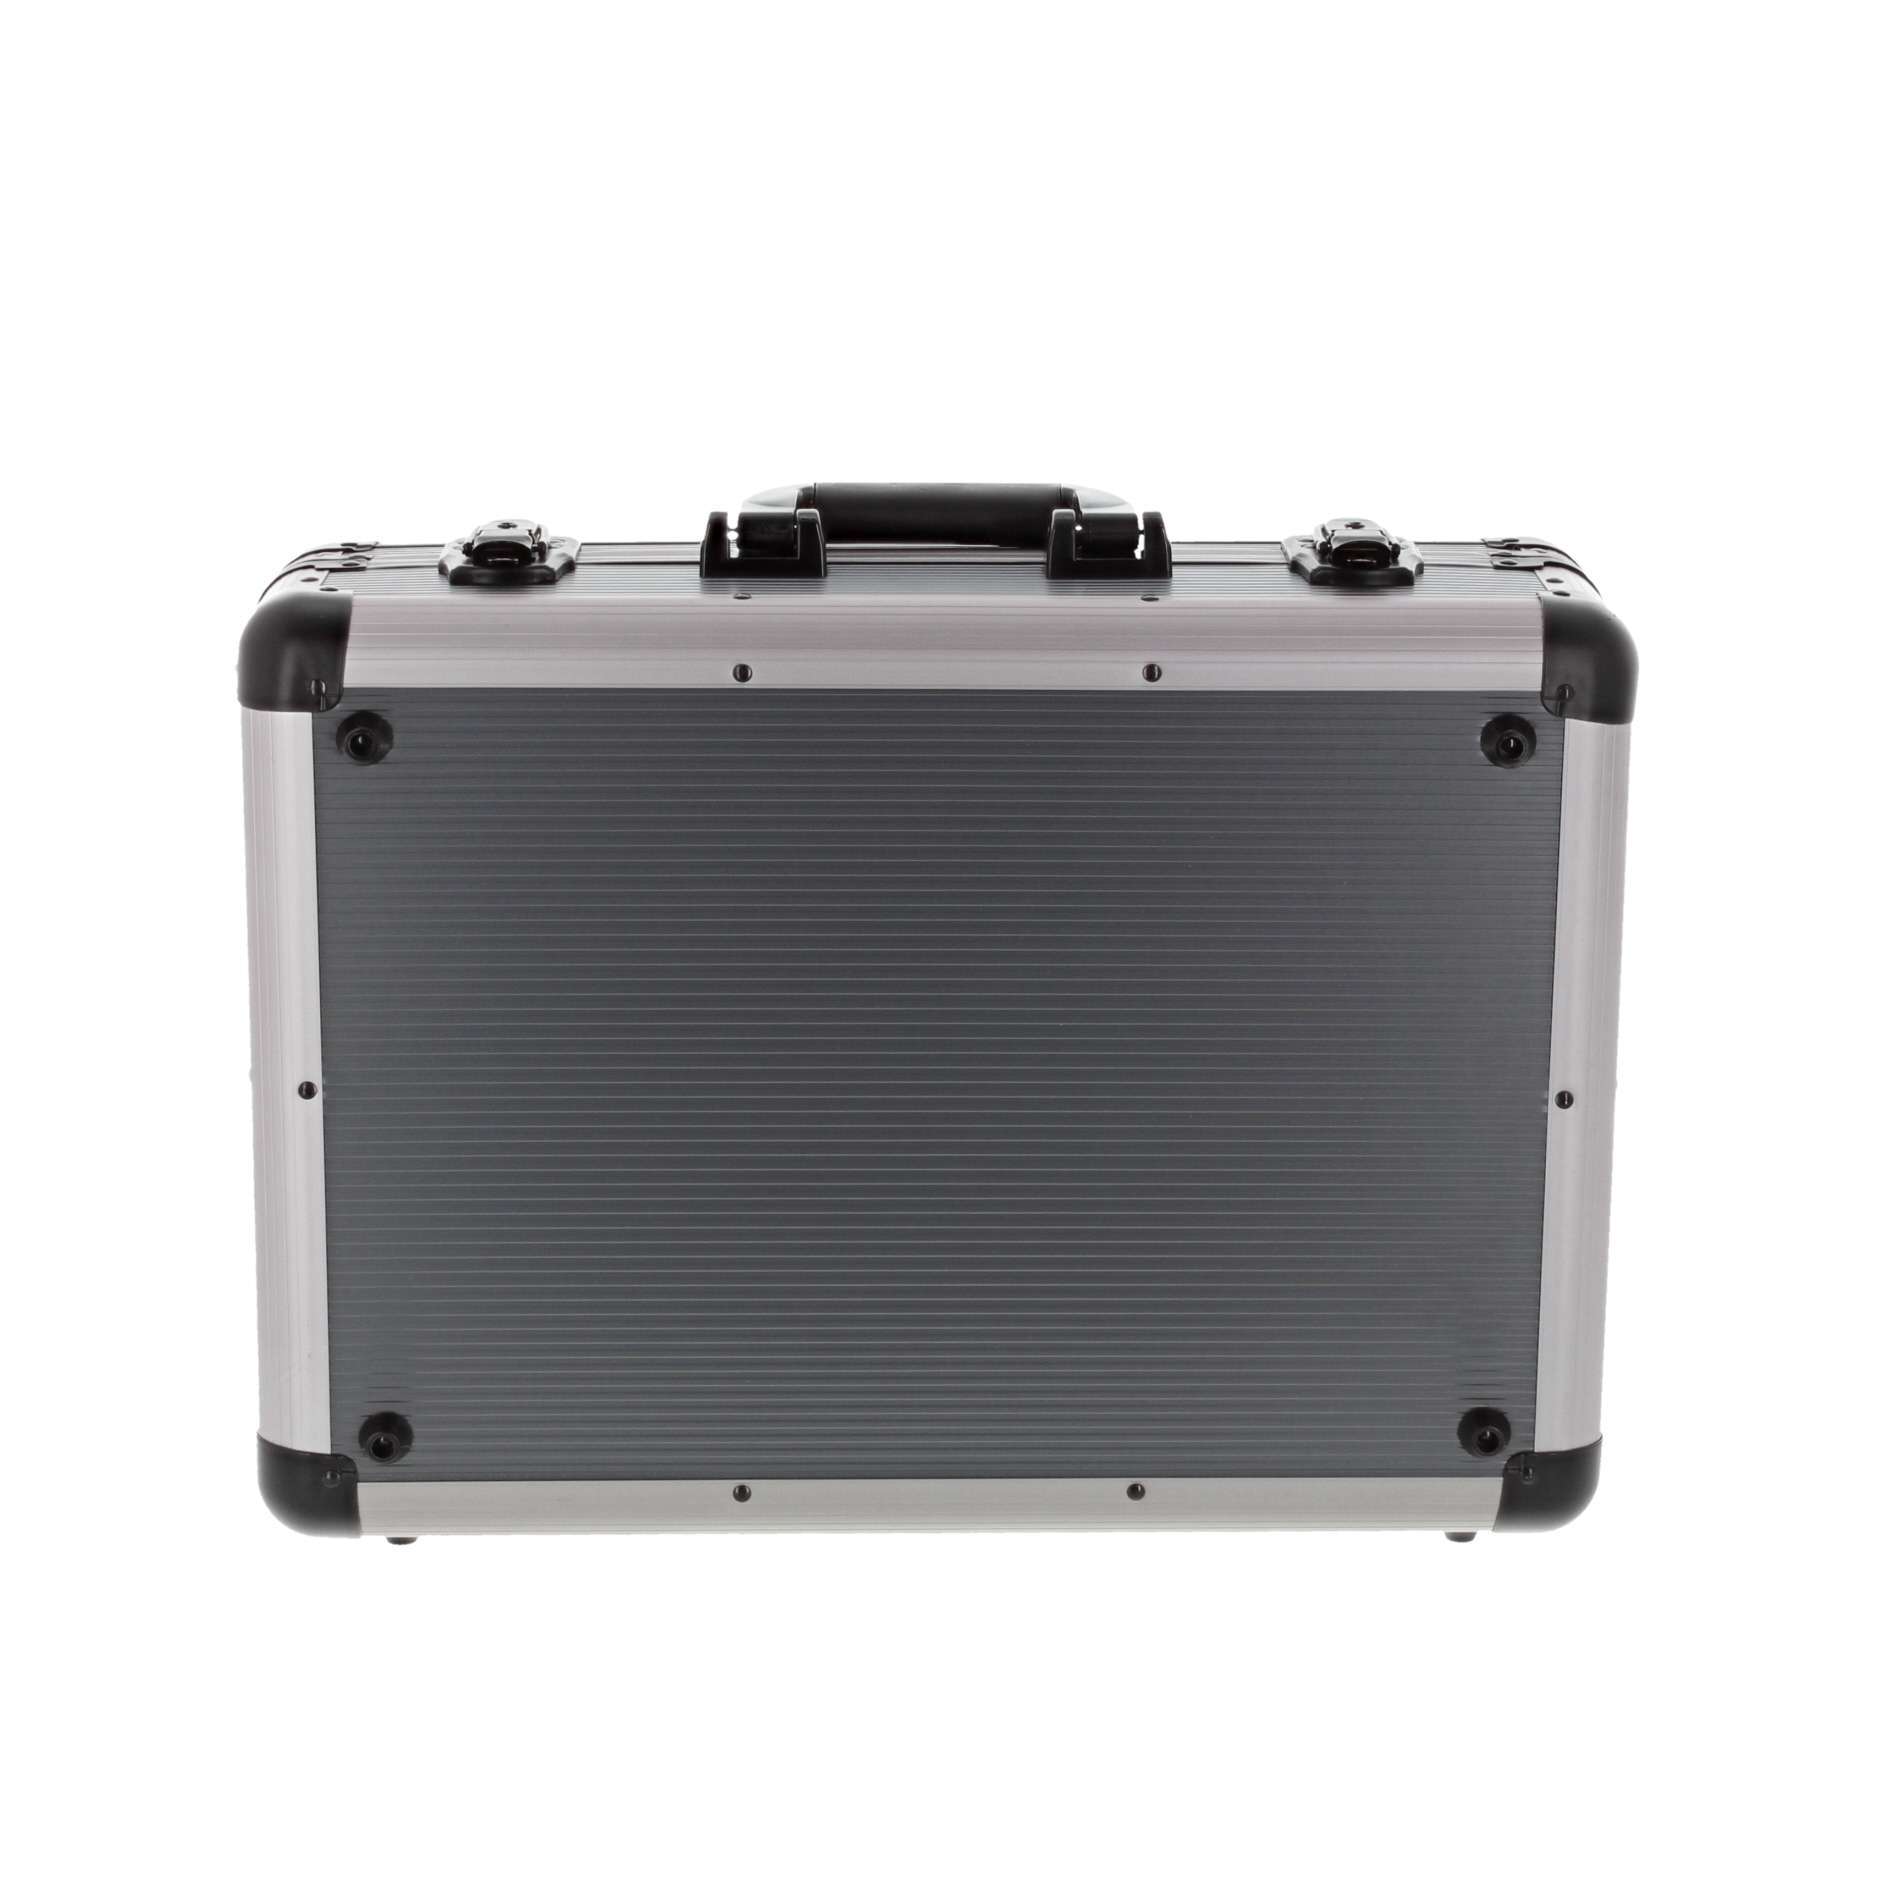 Power Acoustics Fl Digital 2 Valise De Transport Universelle Taille S - DJ flightcase - Variation 2